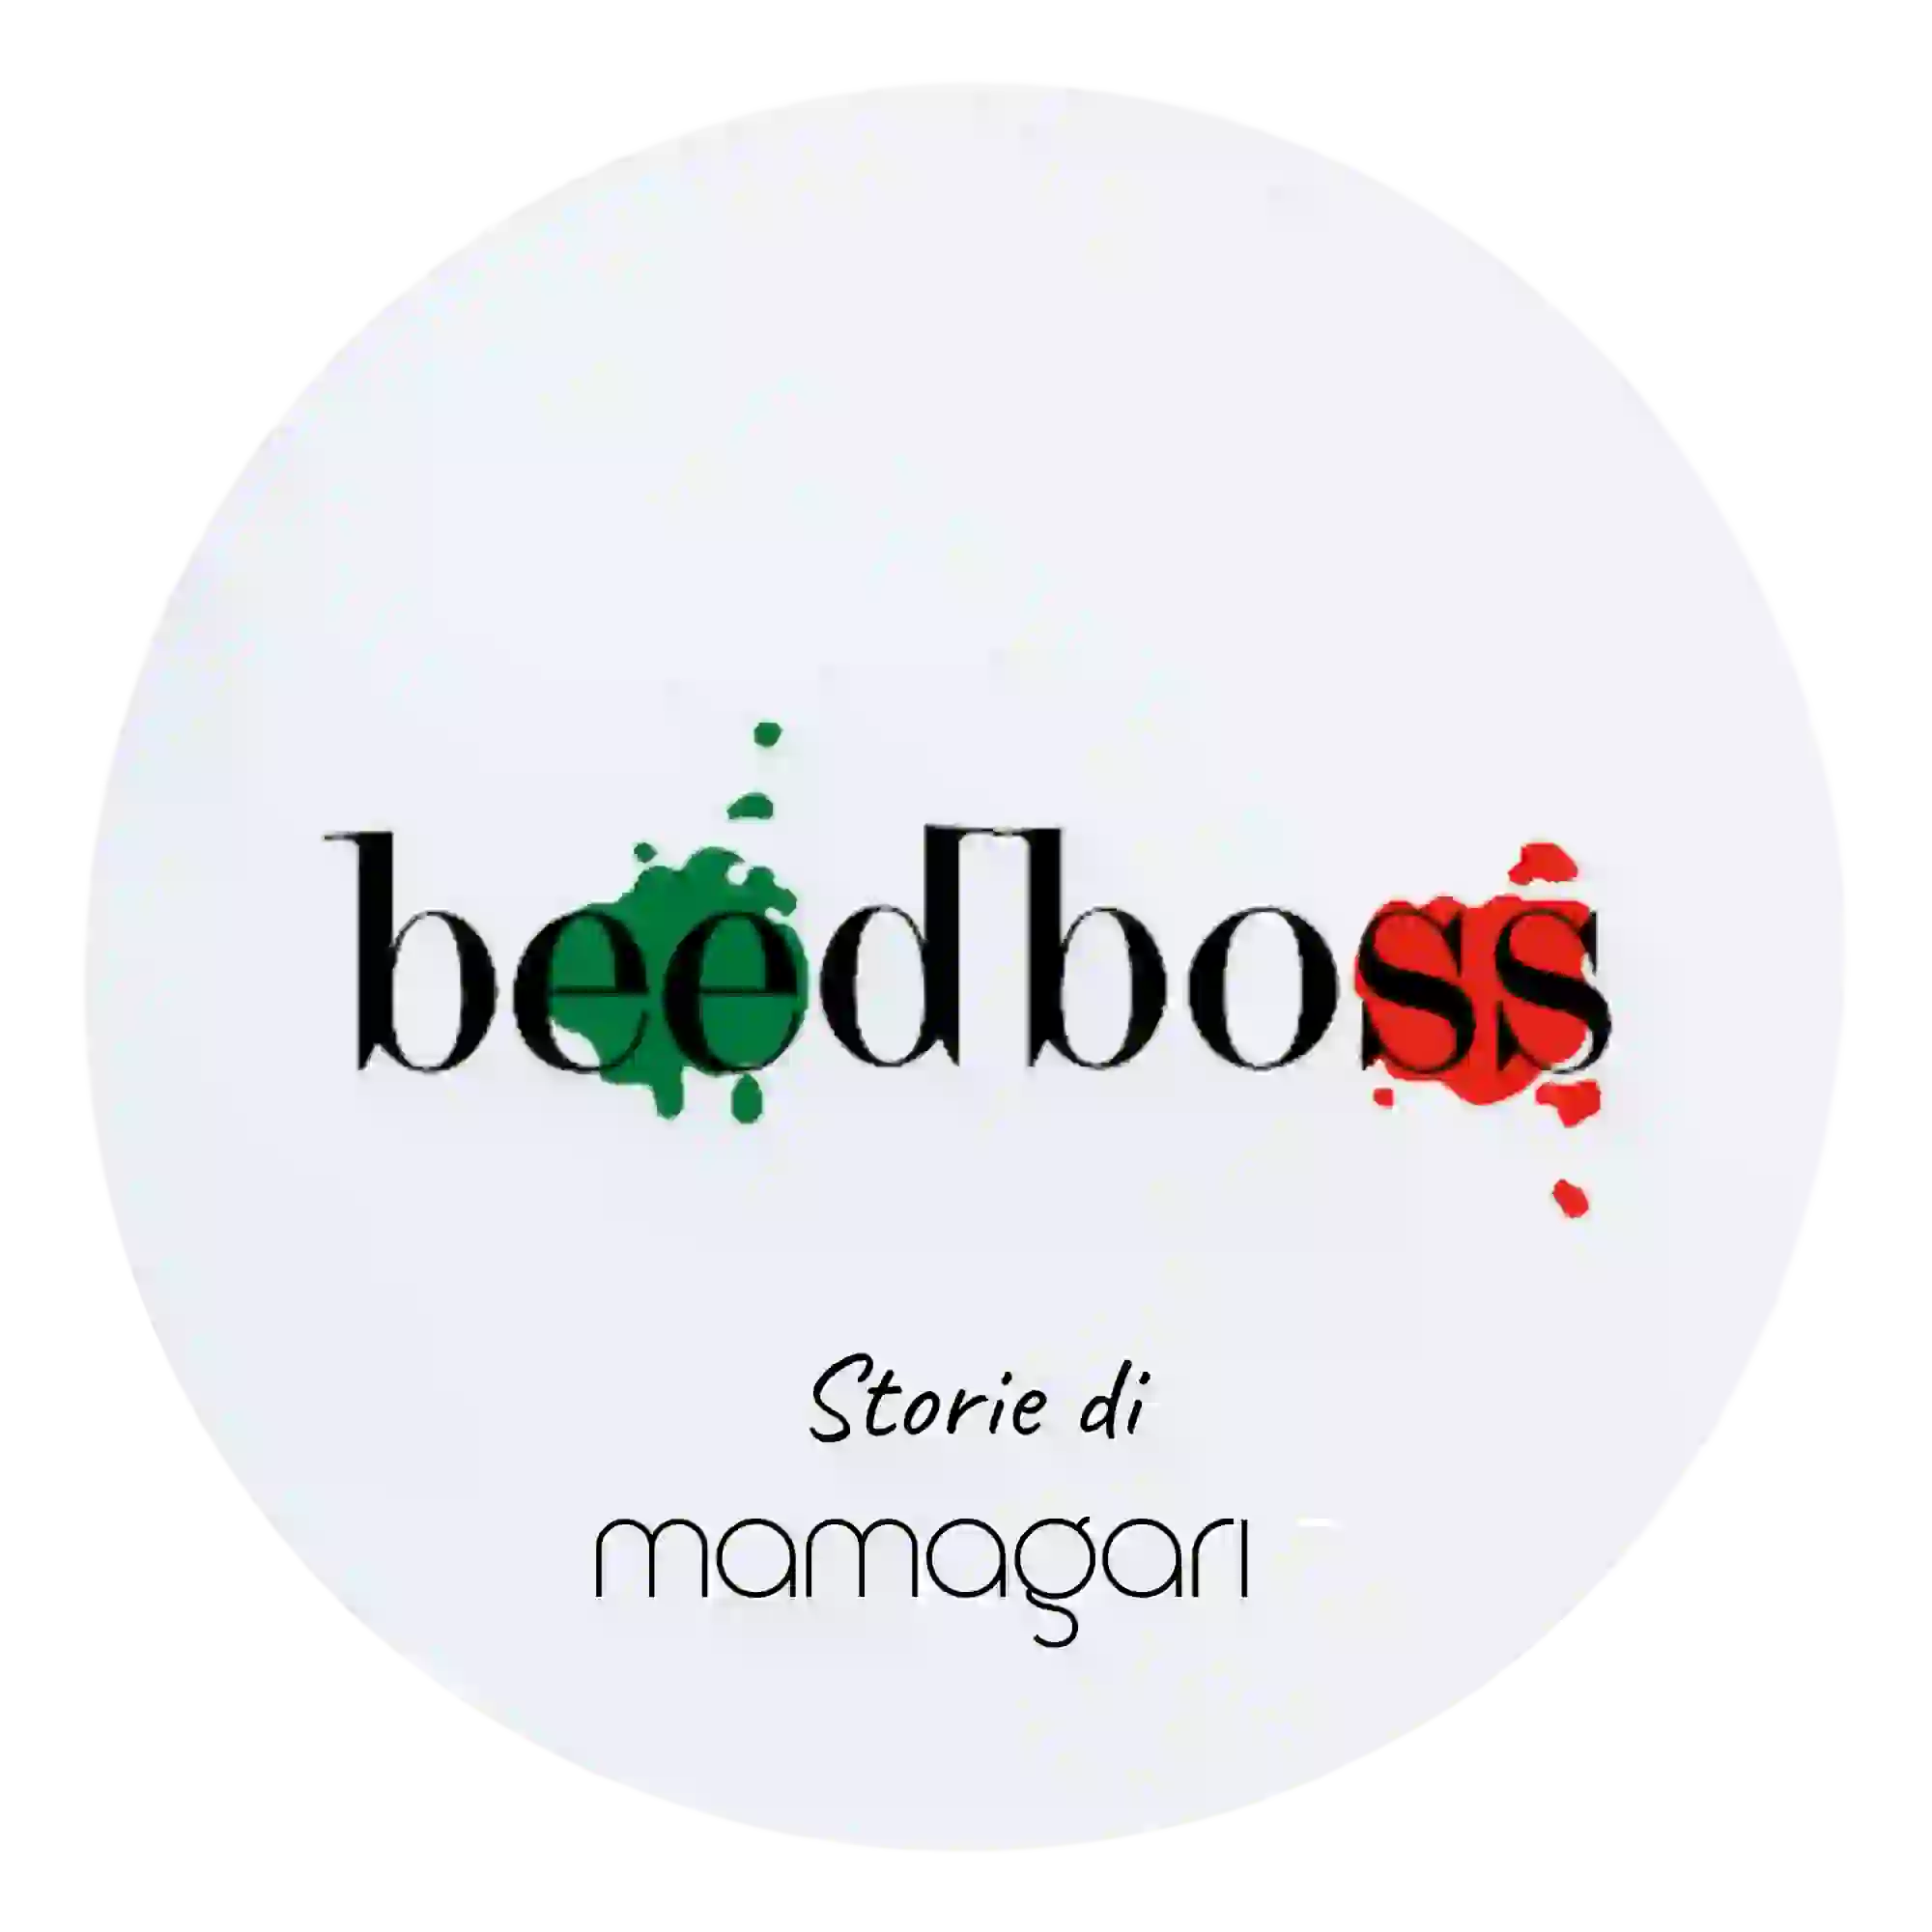 beedboss Agenzia di web marketing italia seo google ads social e website